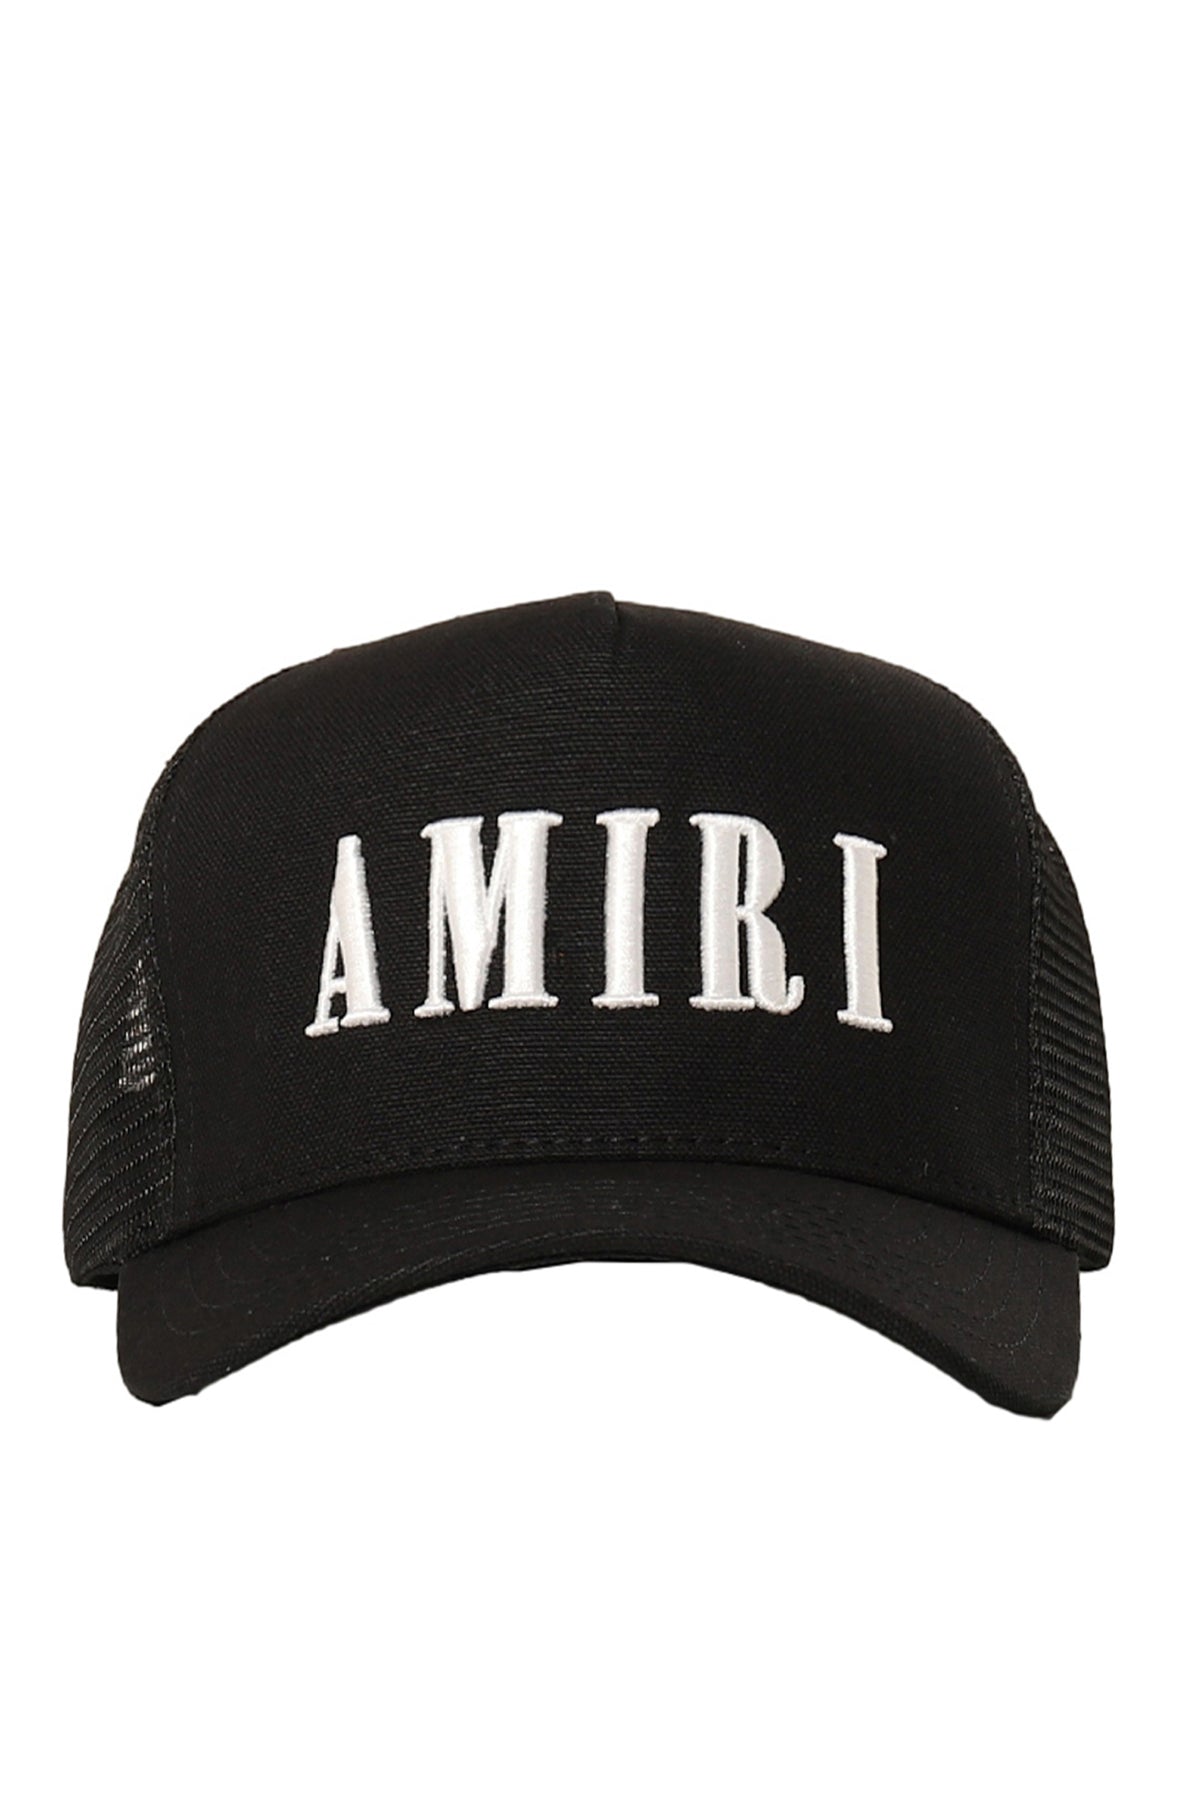 AMIRI CORE LOGO TRUCKER HAT / BLK